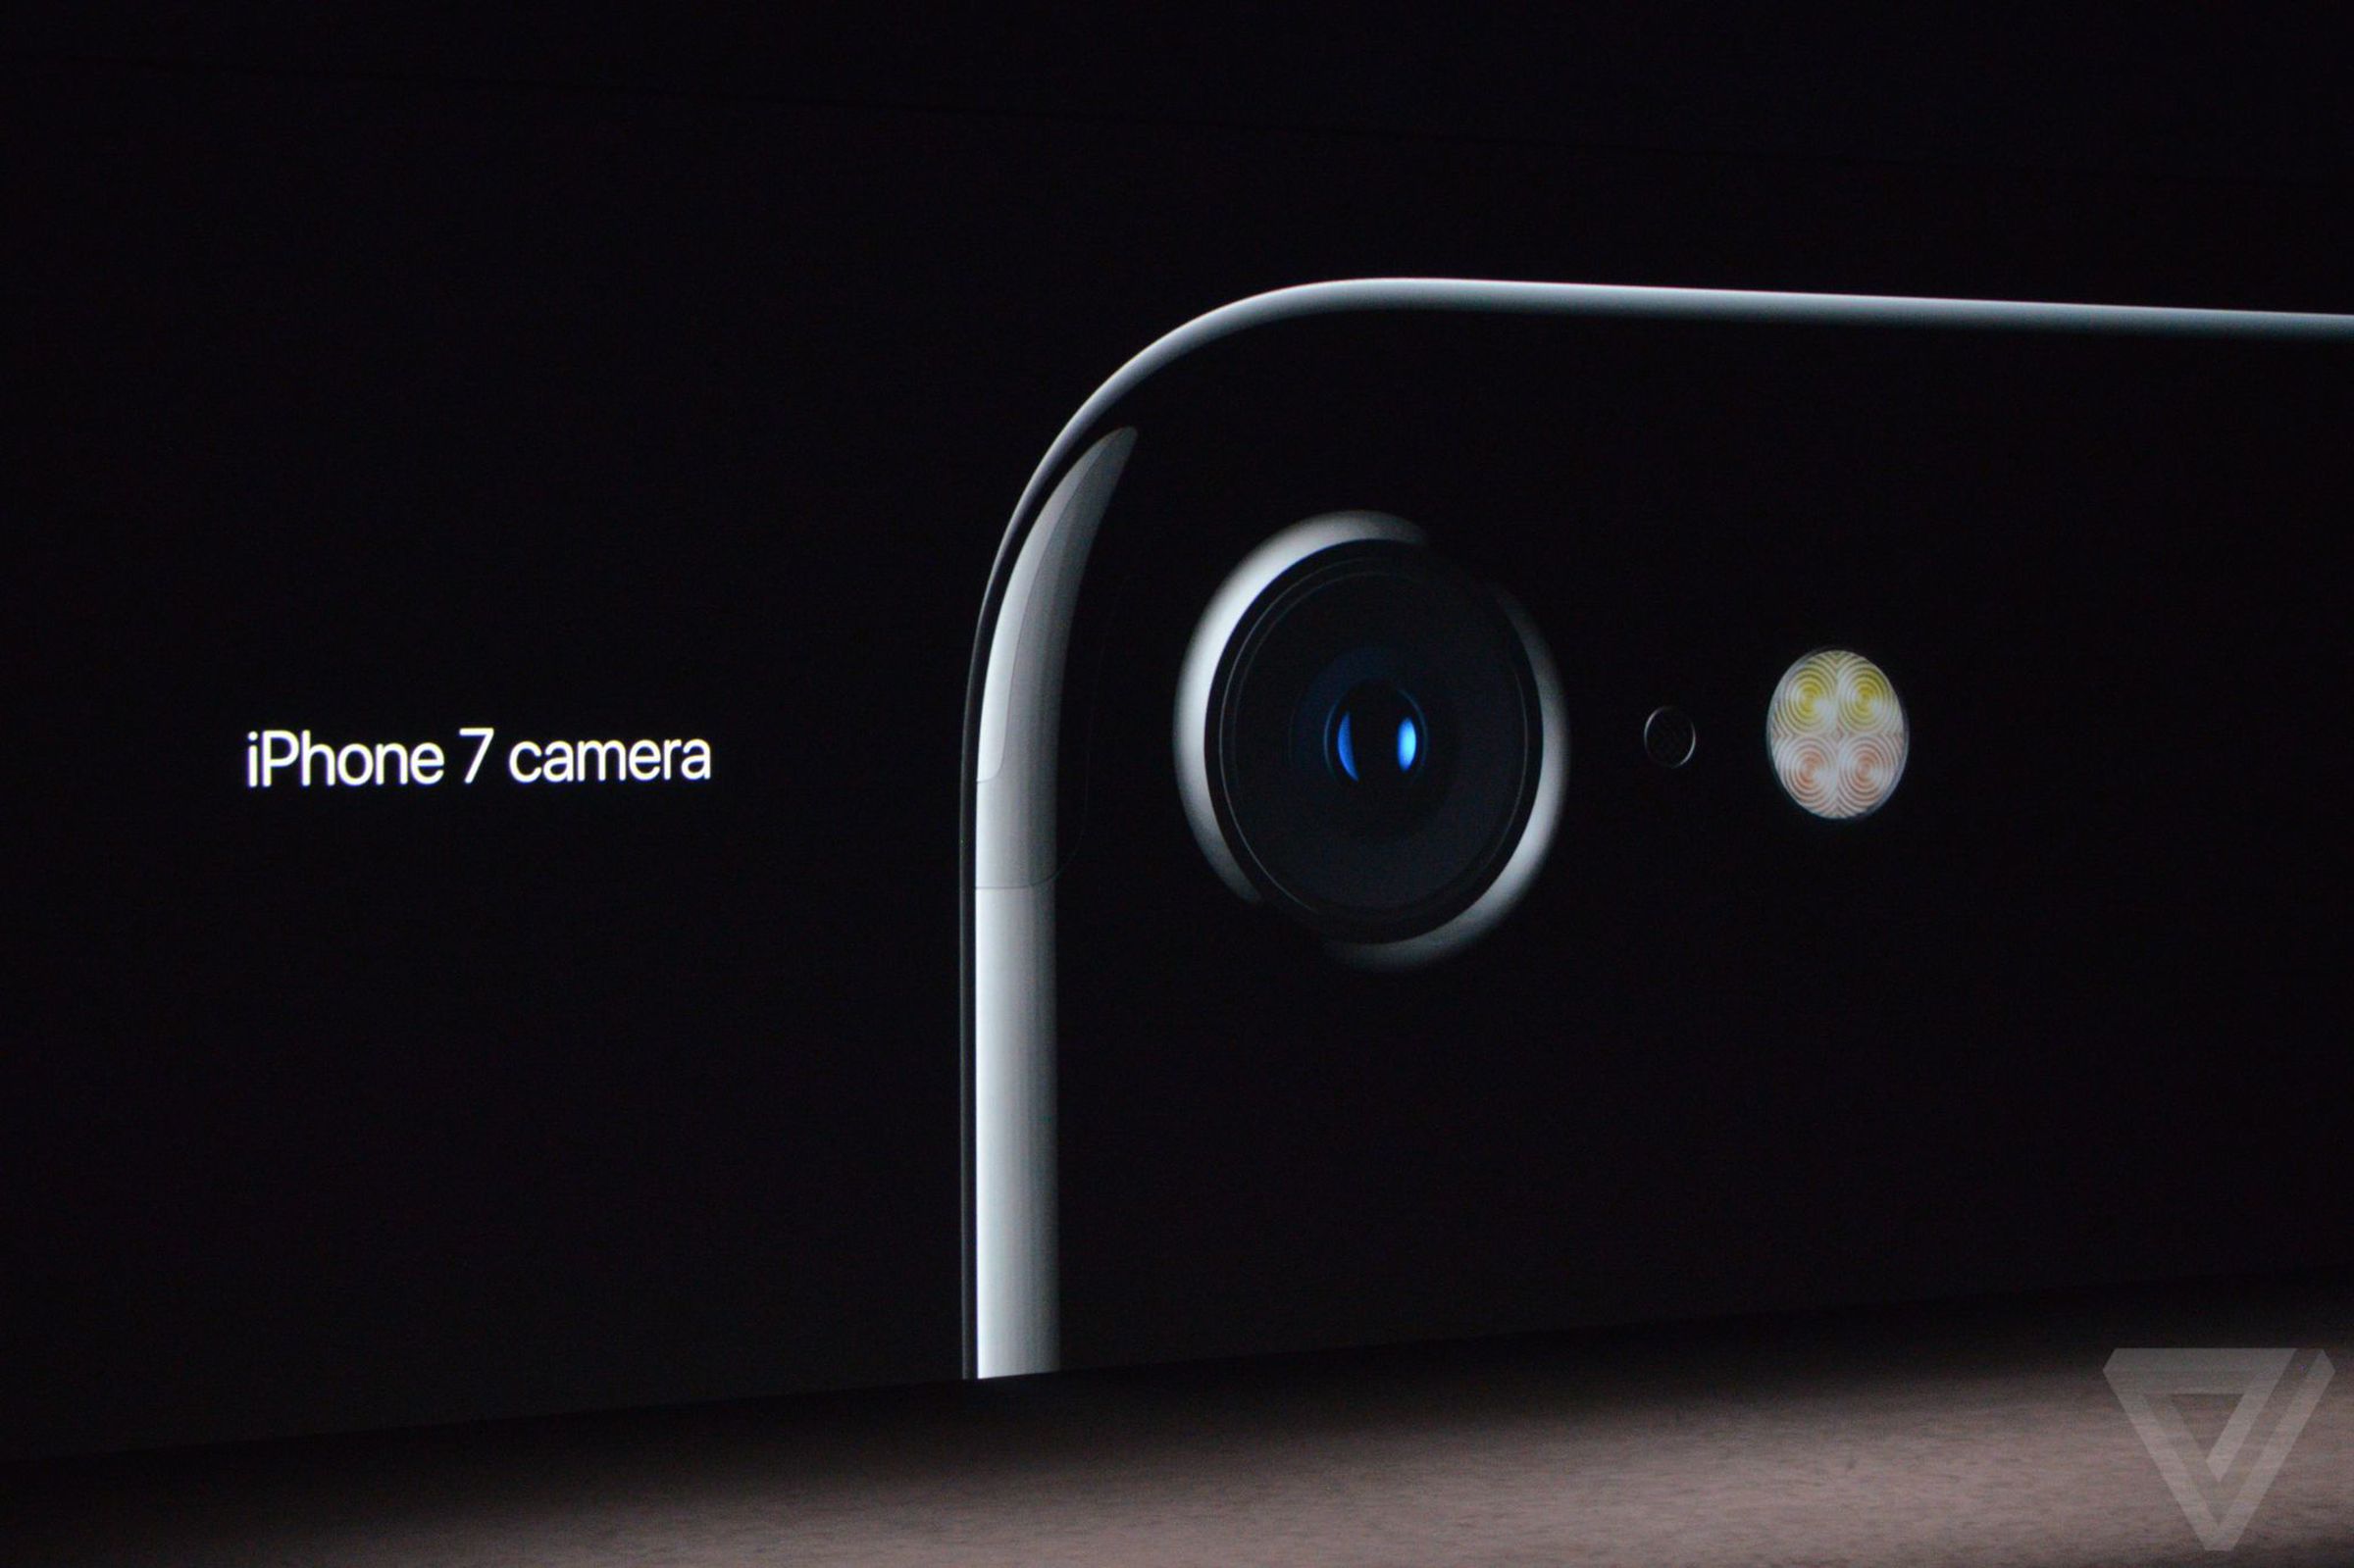 Apple iPhone 7 Announcement photos